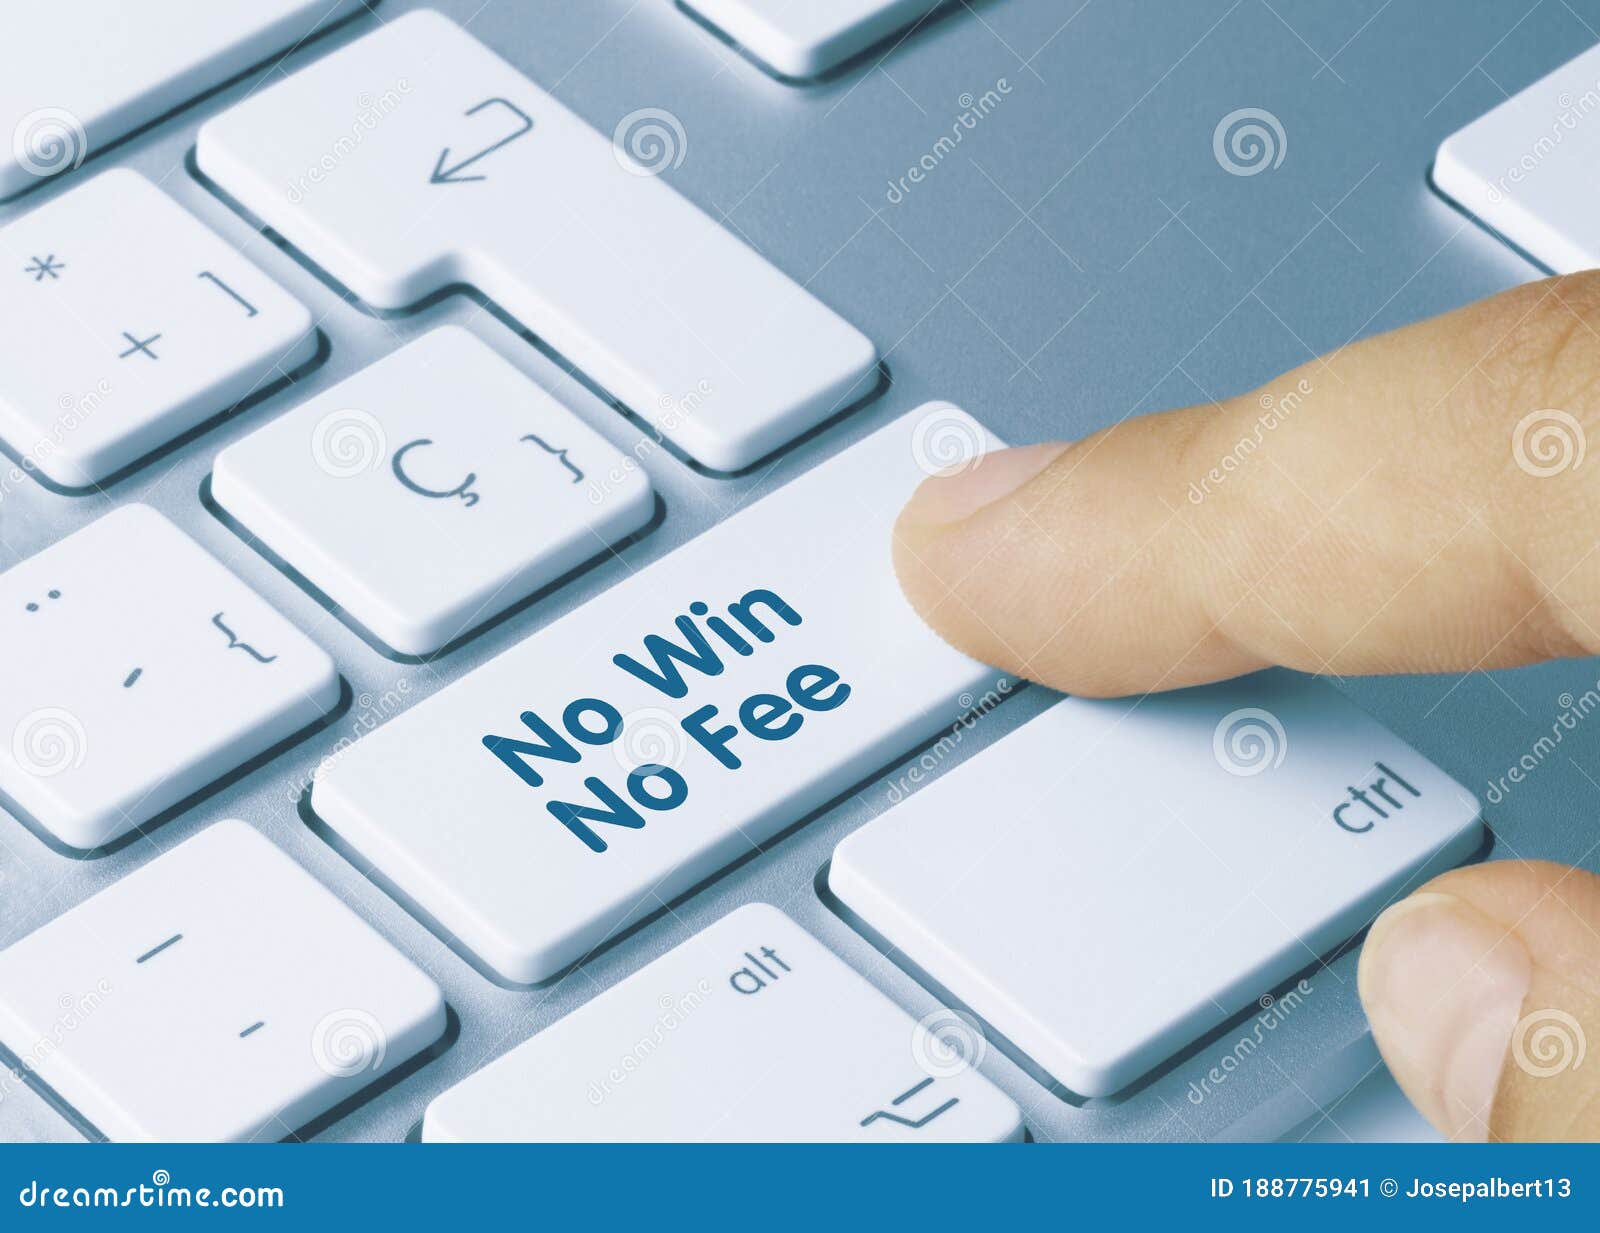 no win no fee - inscription on blue keyboard key